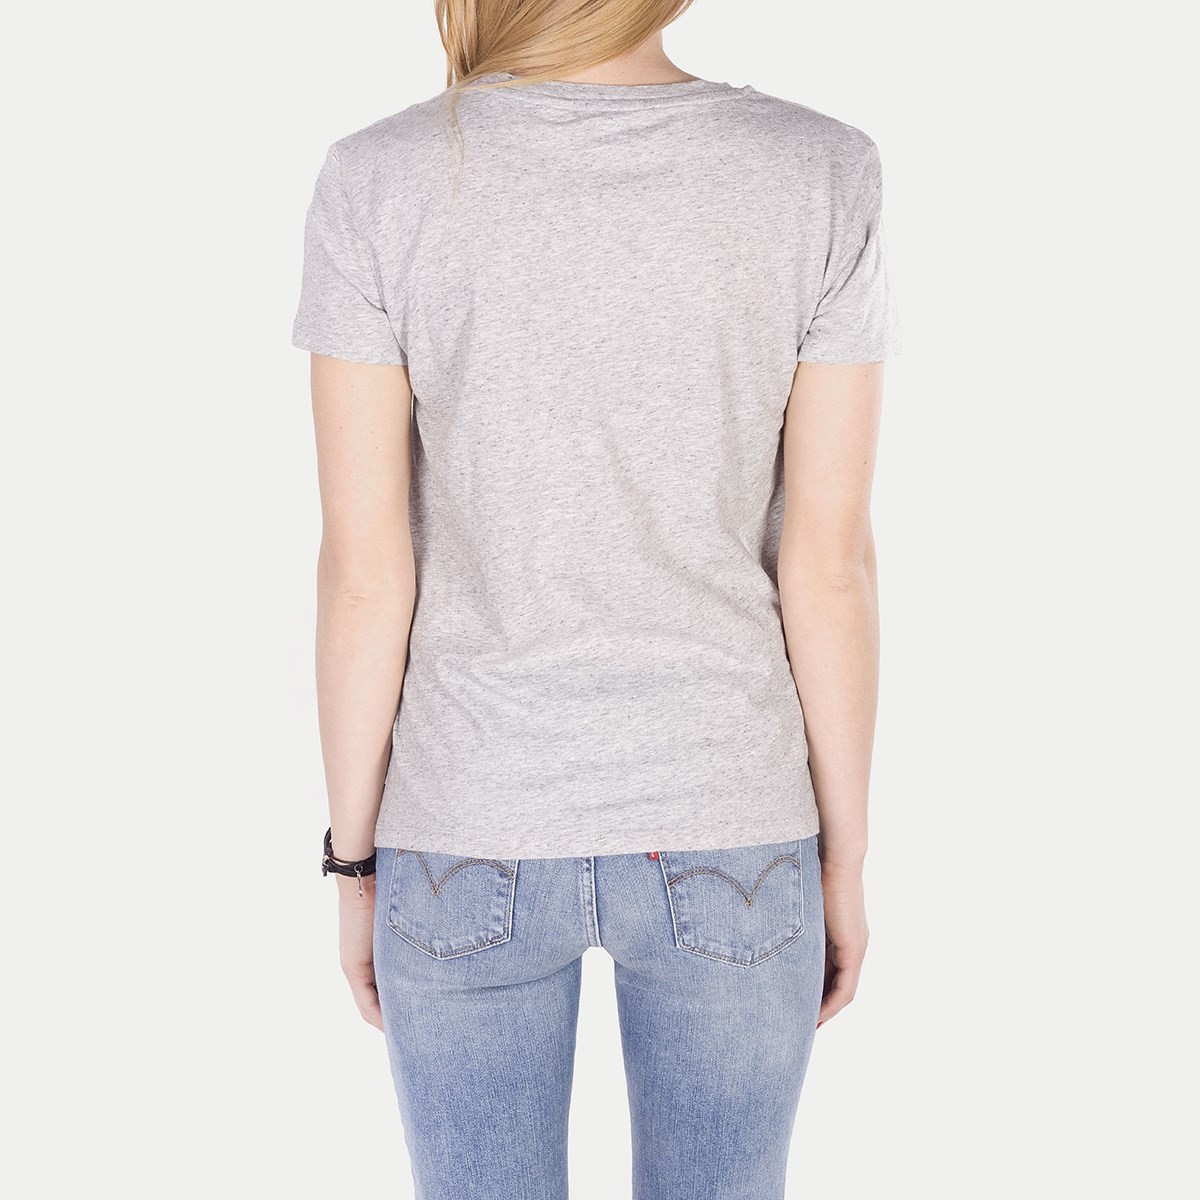 Levis Kadın T-Shirt 17369-0303 